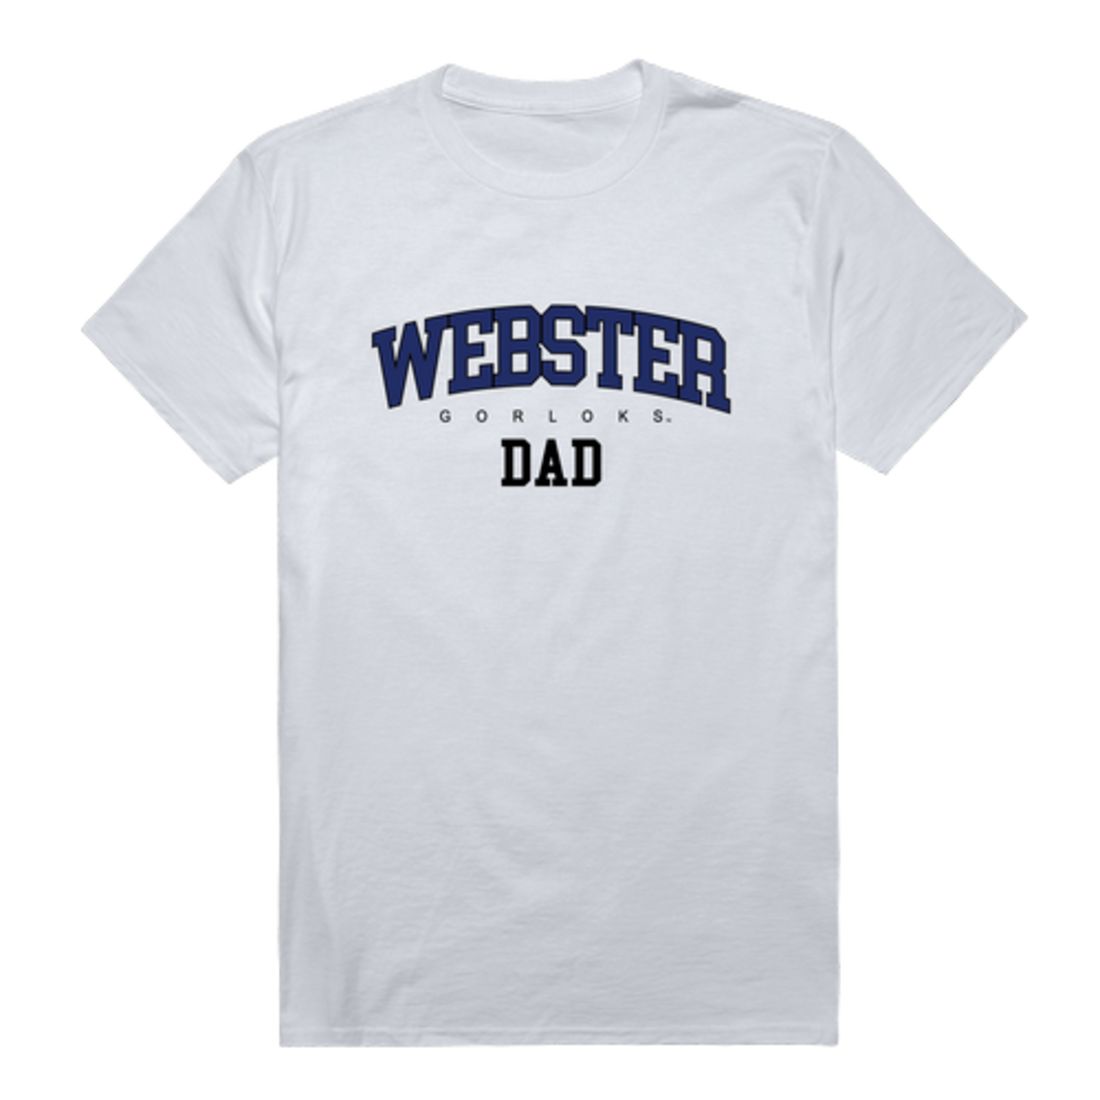 Webster University Gorlocks Dad T-Shirt